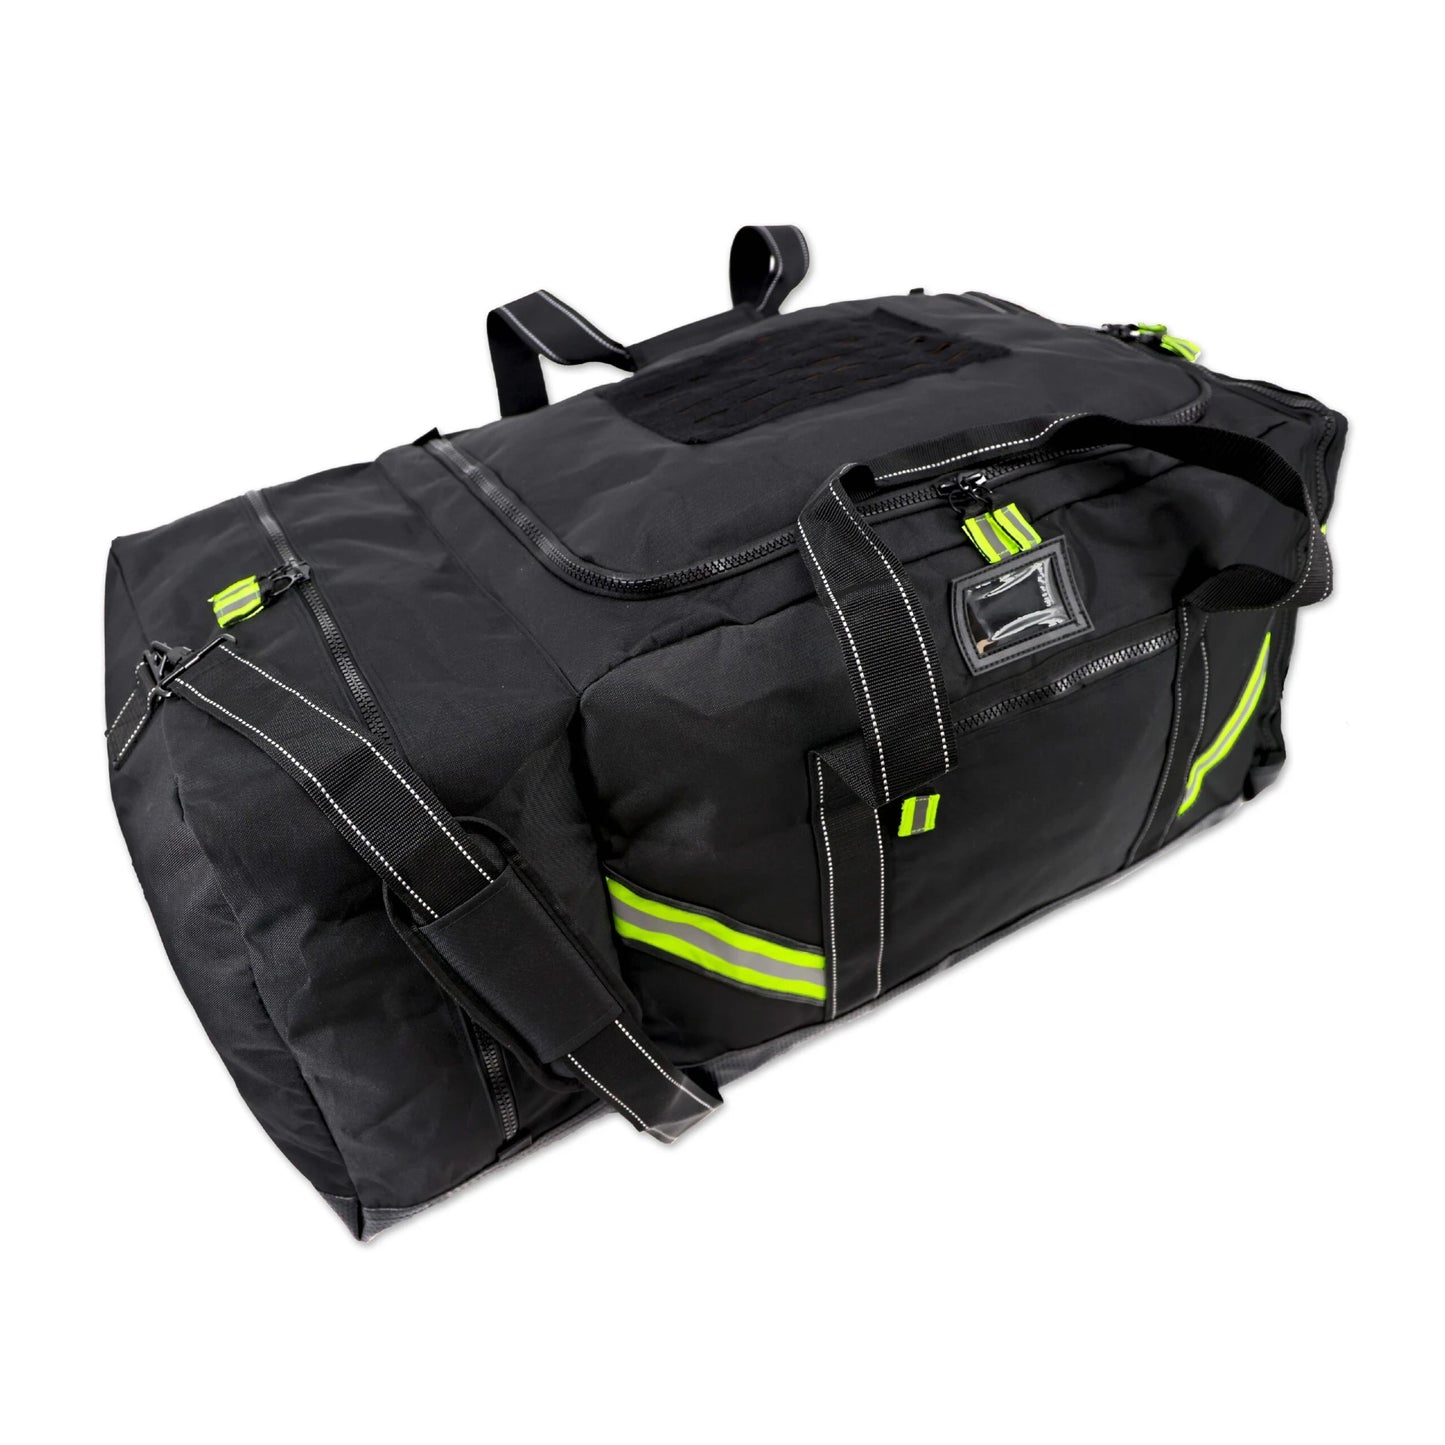 Firefighter Premium 3XL Step-In Turnout Gear Bag – w/ NO LOGO